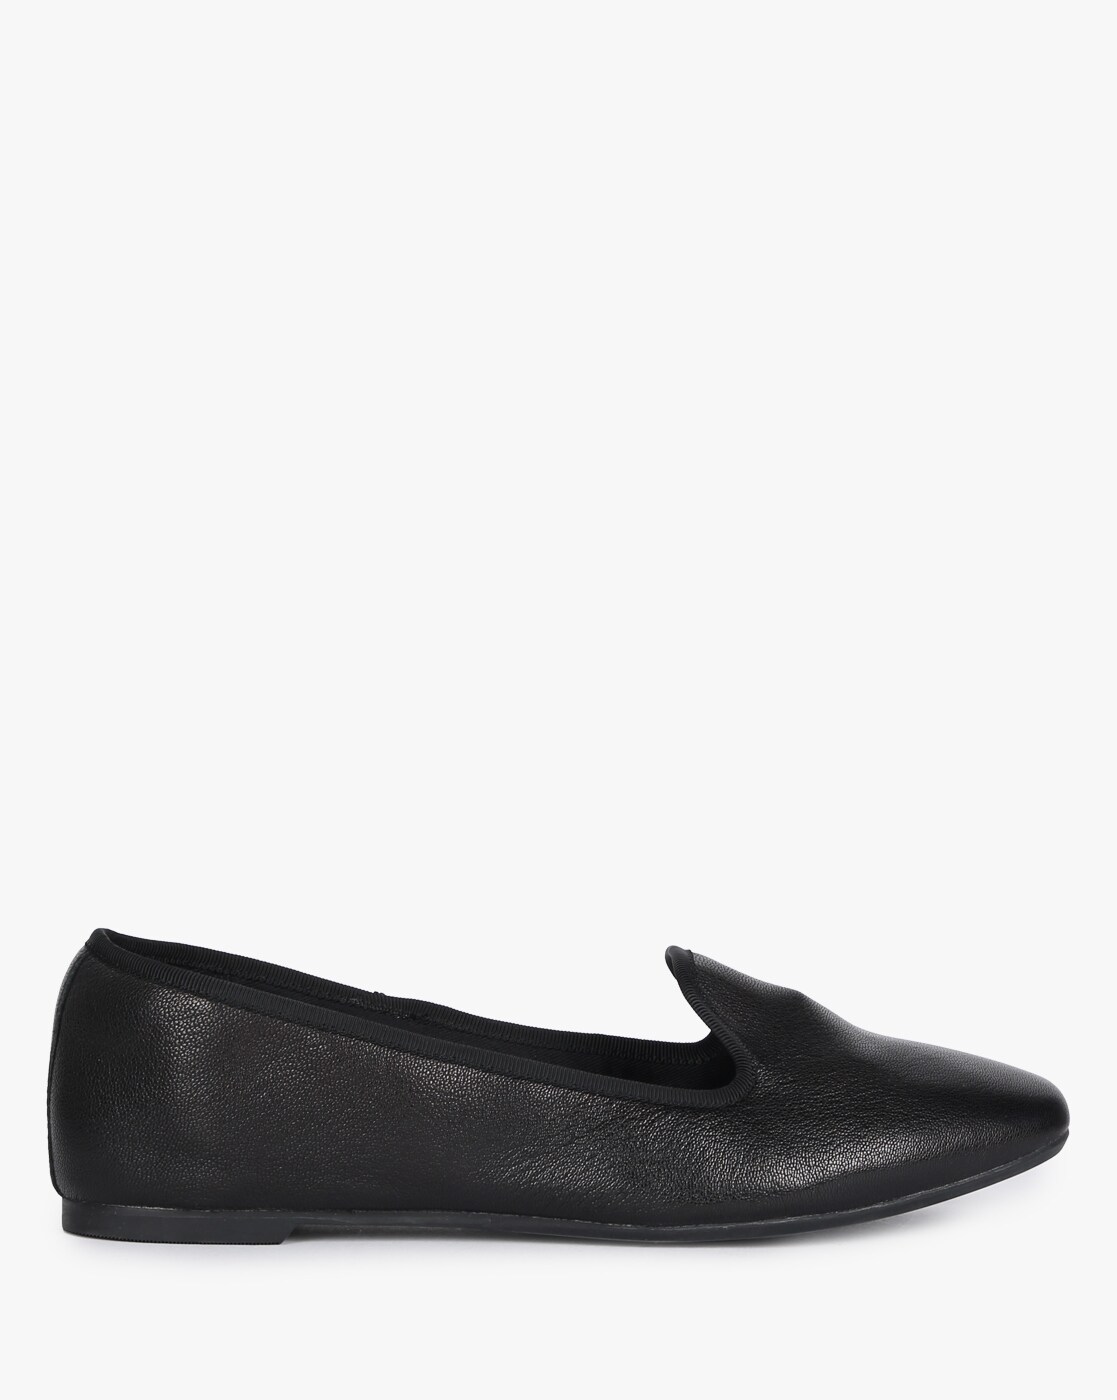 Clarks Black Leather ladies shoes/flats/pumps 5.5/39-6.5/40 Е Wider fit BNWB